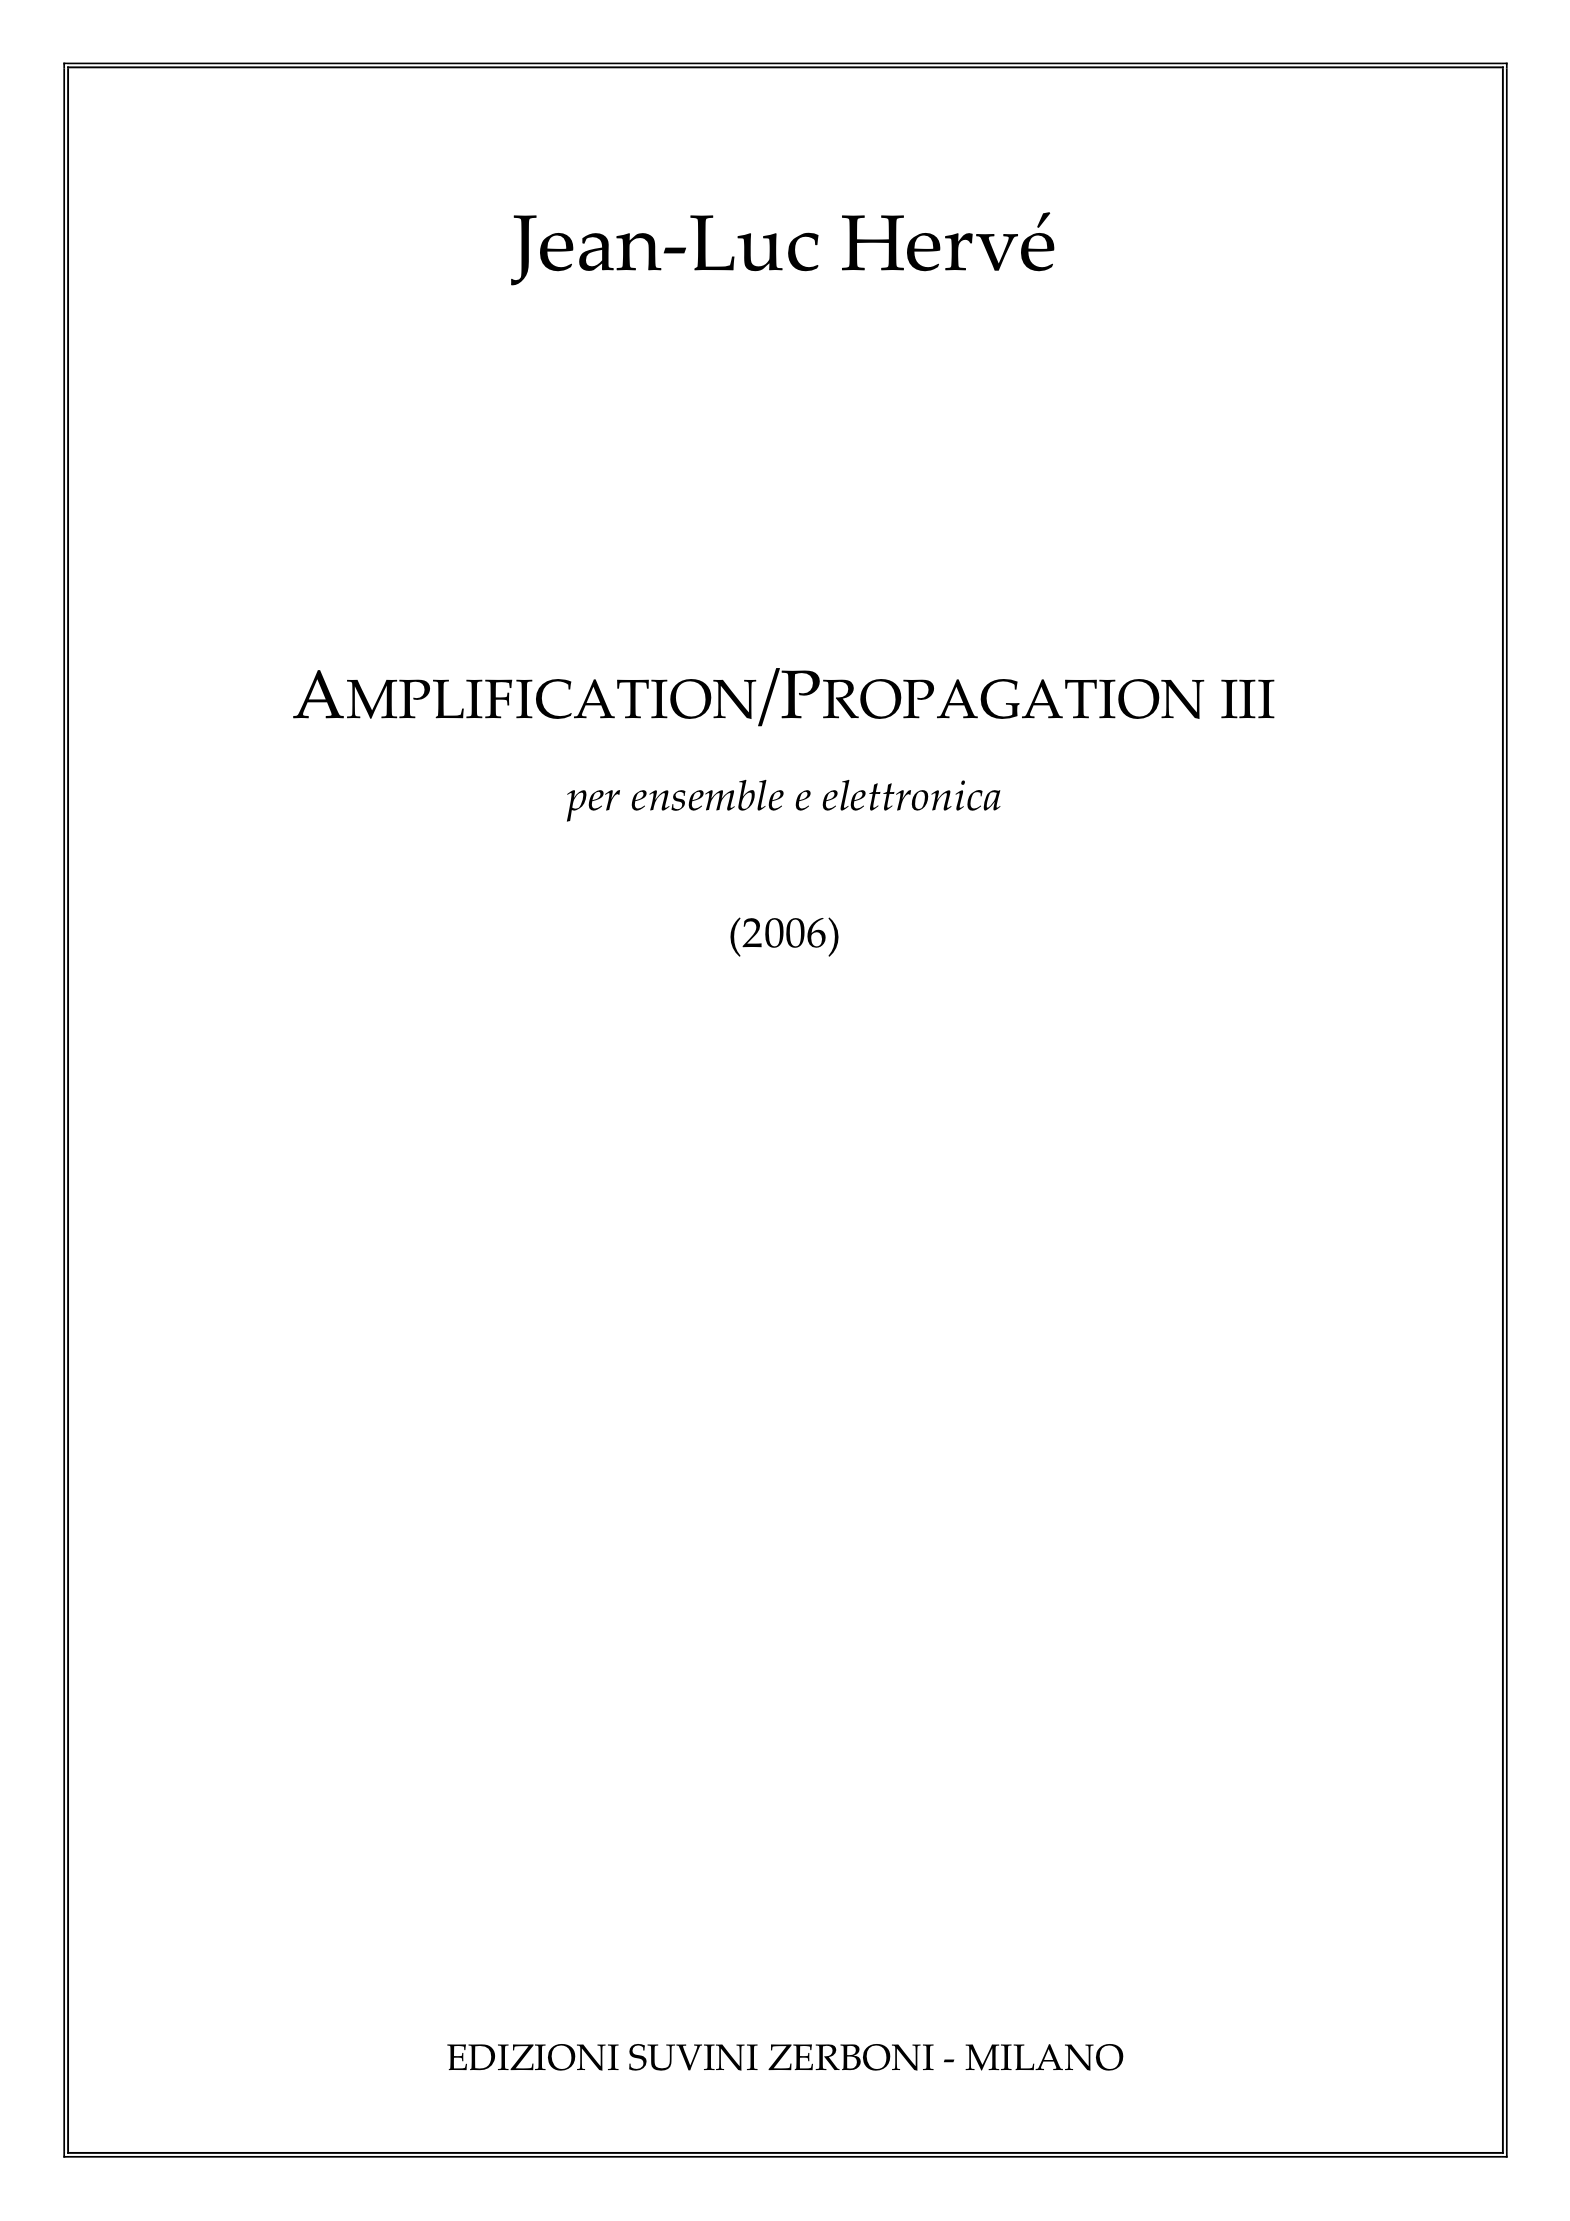 Amplification propagation III 1